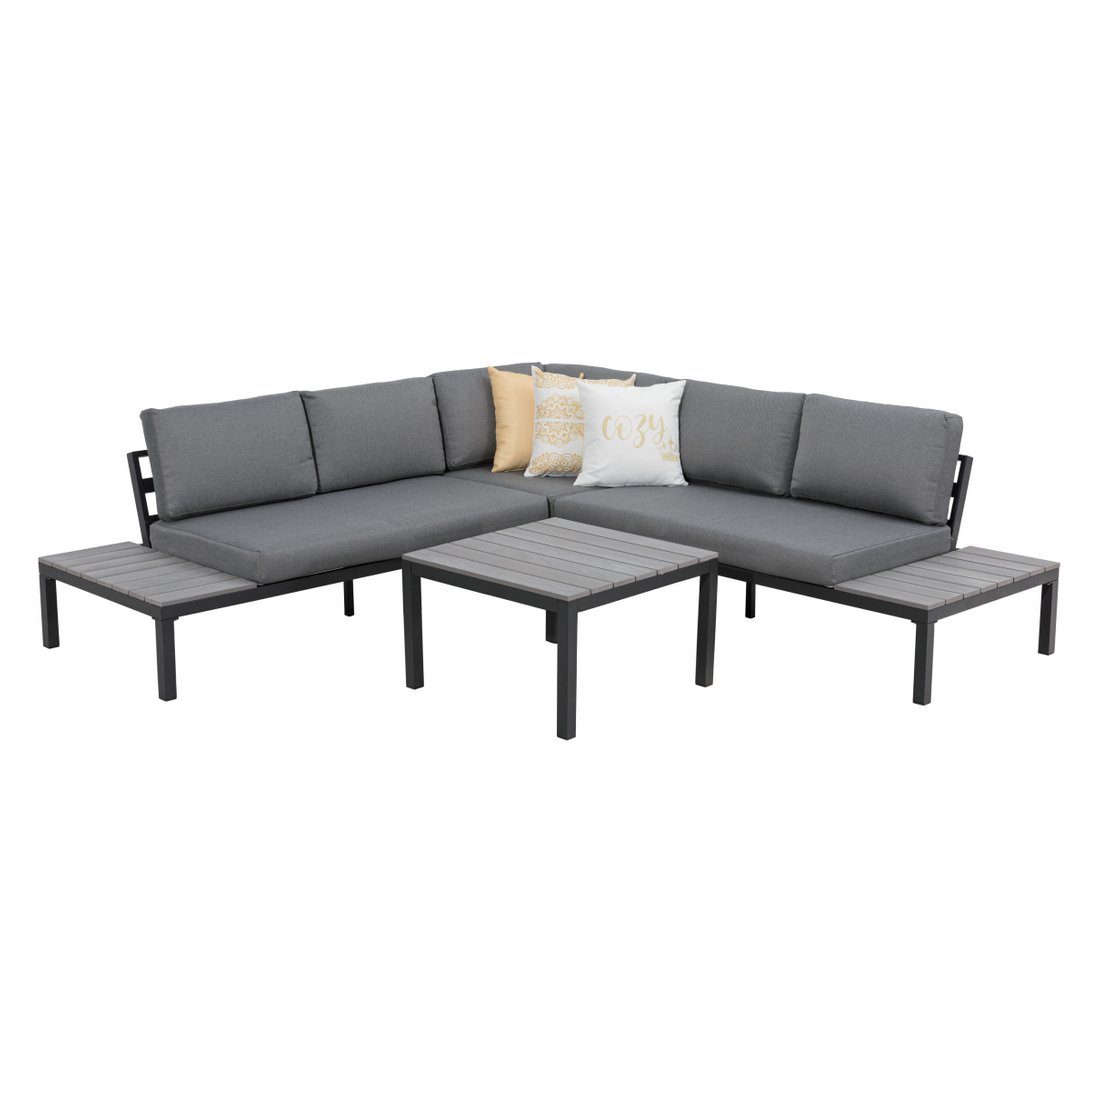 MANDALIKA Garden Loungeset Aluminium Eck Lounge Sofa Set Miro